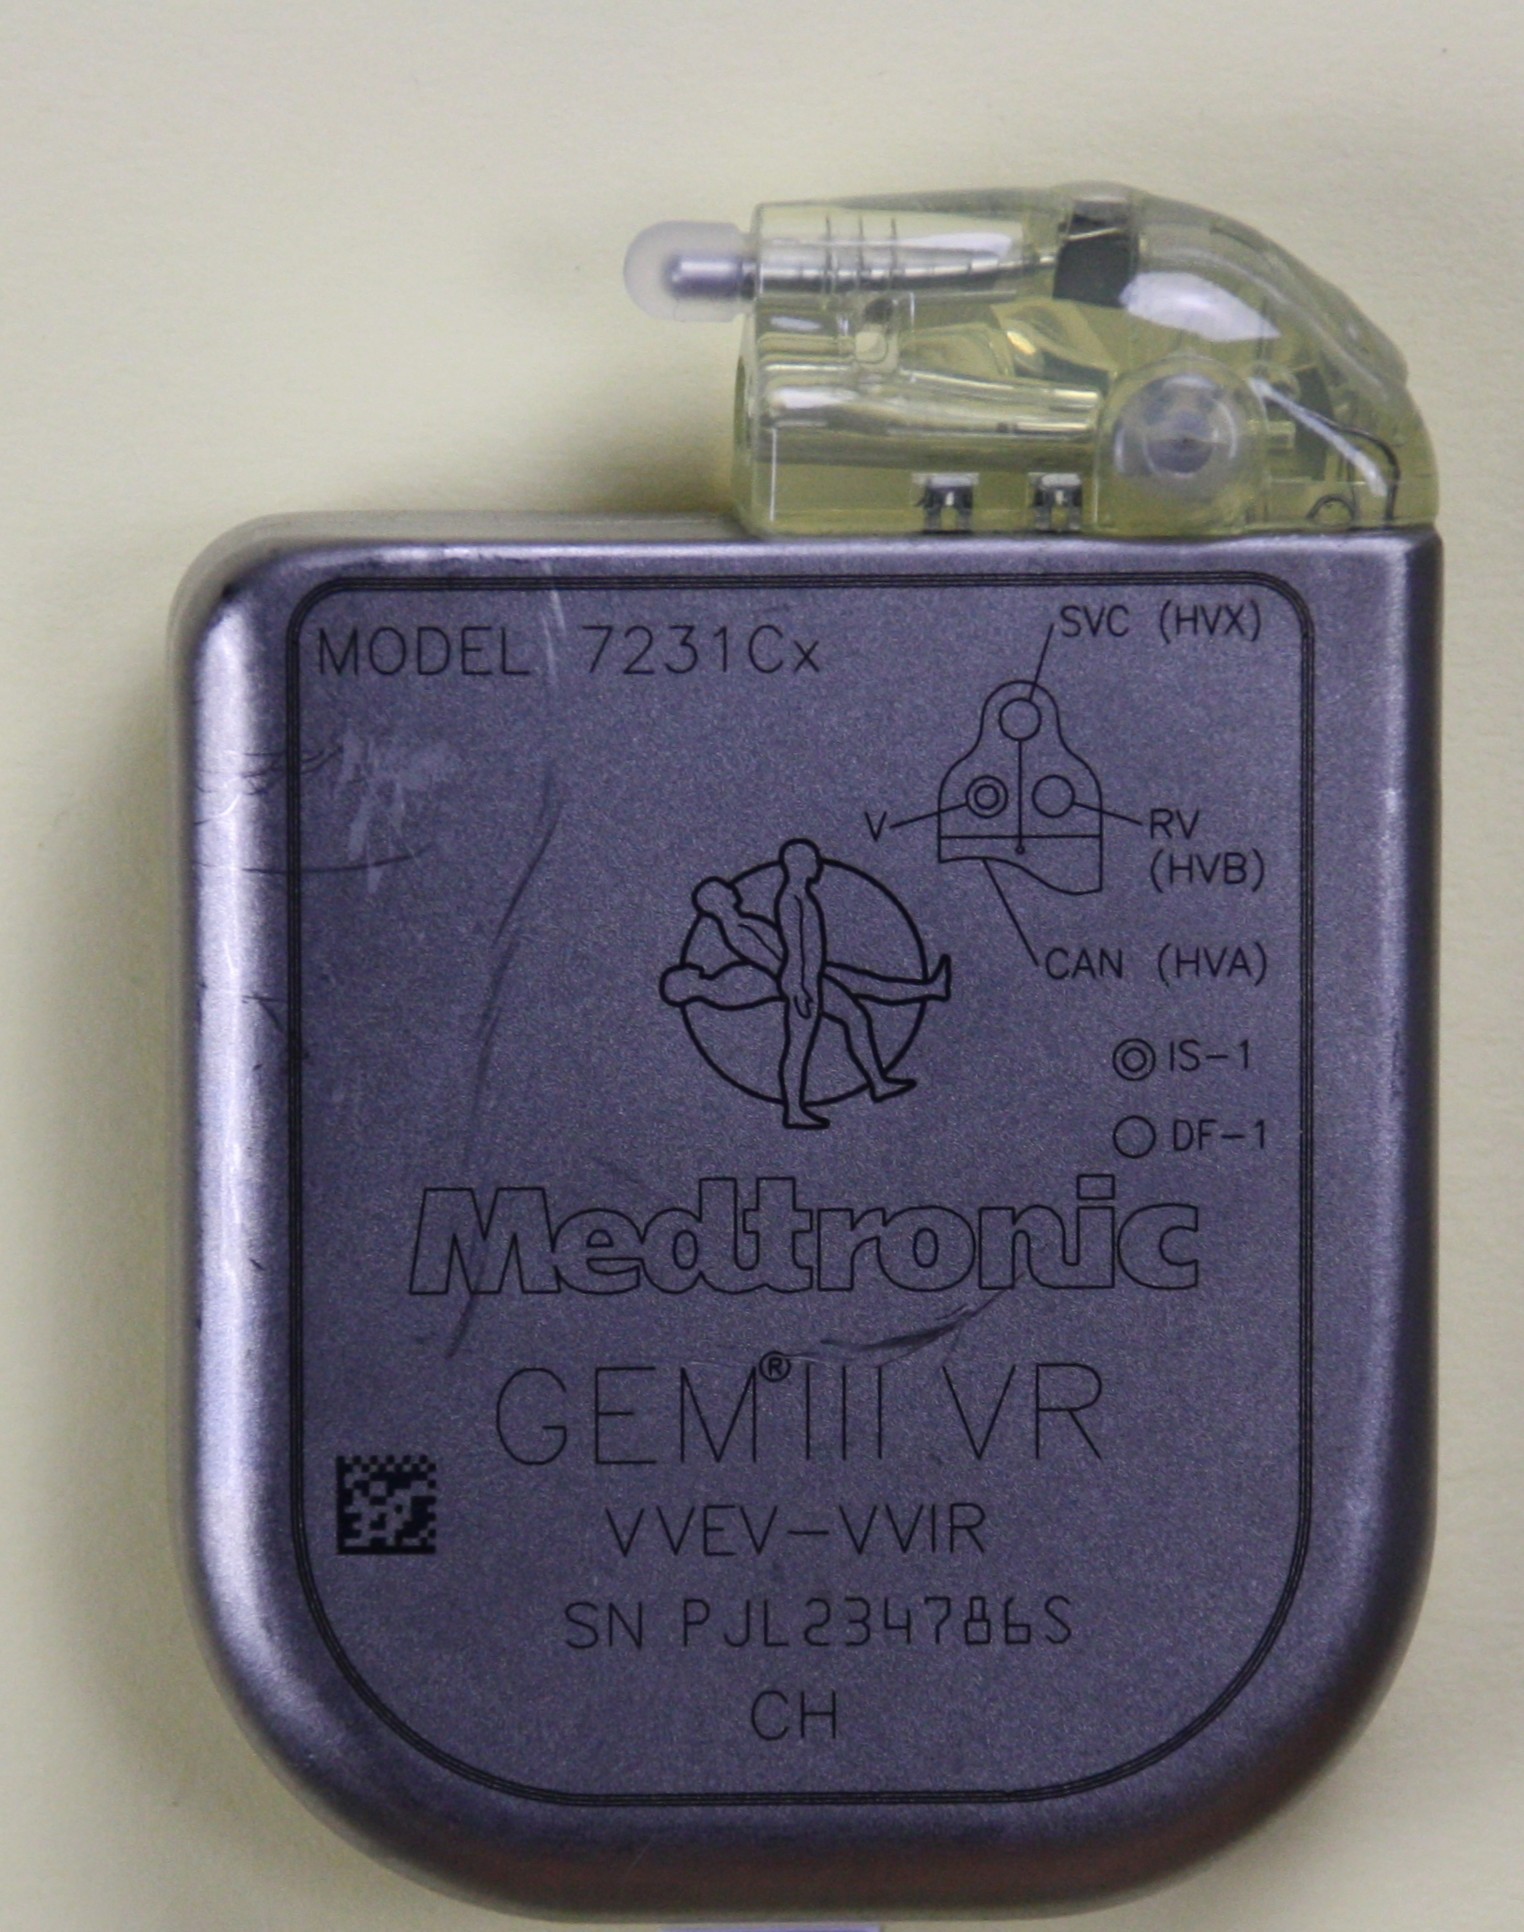 Herzschrittmacher-Defibrillator-Implantat Medtronic GEM III VR 7231Cx (Krankenhausmuseum Bielefeld e.V. CC BY-NC-SA)